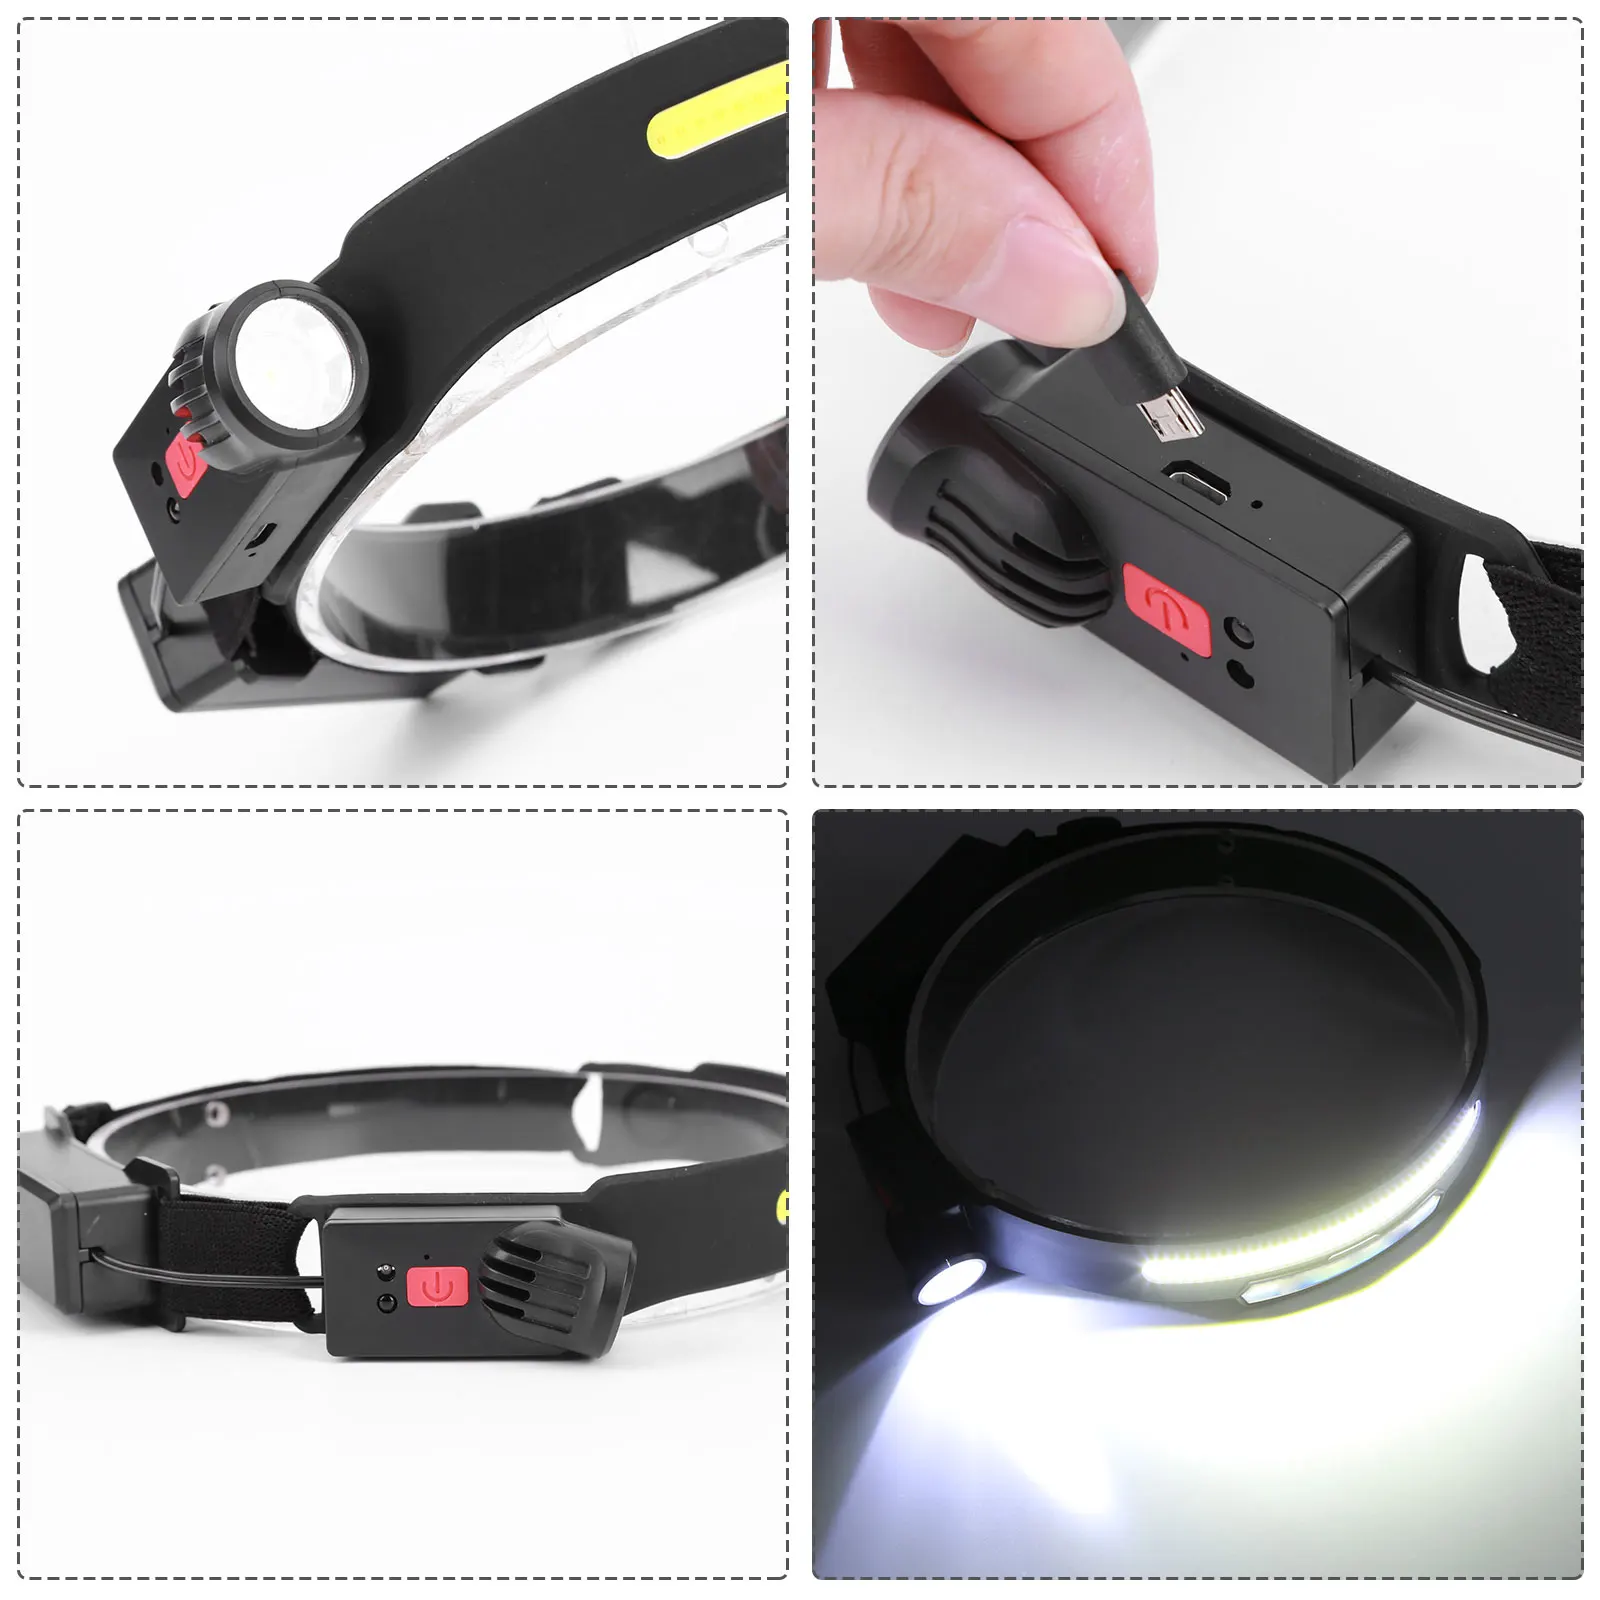 

COB LED Headlamp Sensor Headlight Flashlight USB Rechargeable Head Lamp Torch for Outdoor Safety Survival Light